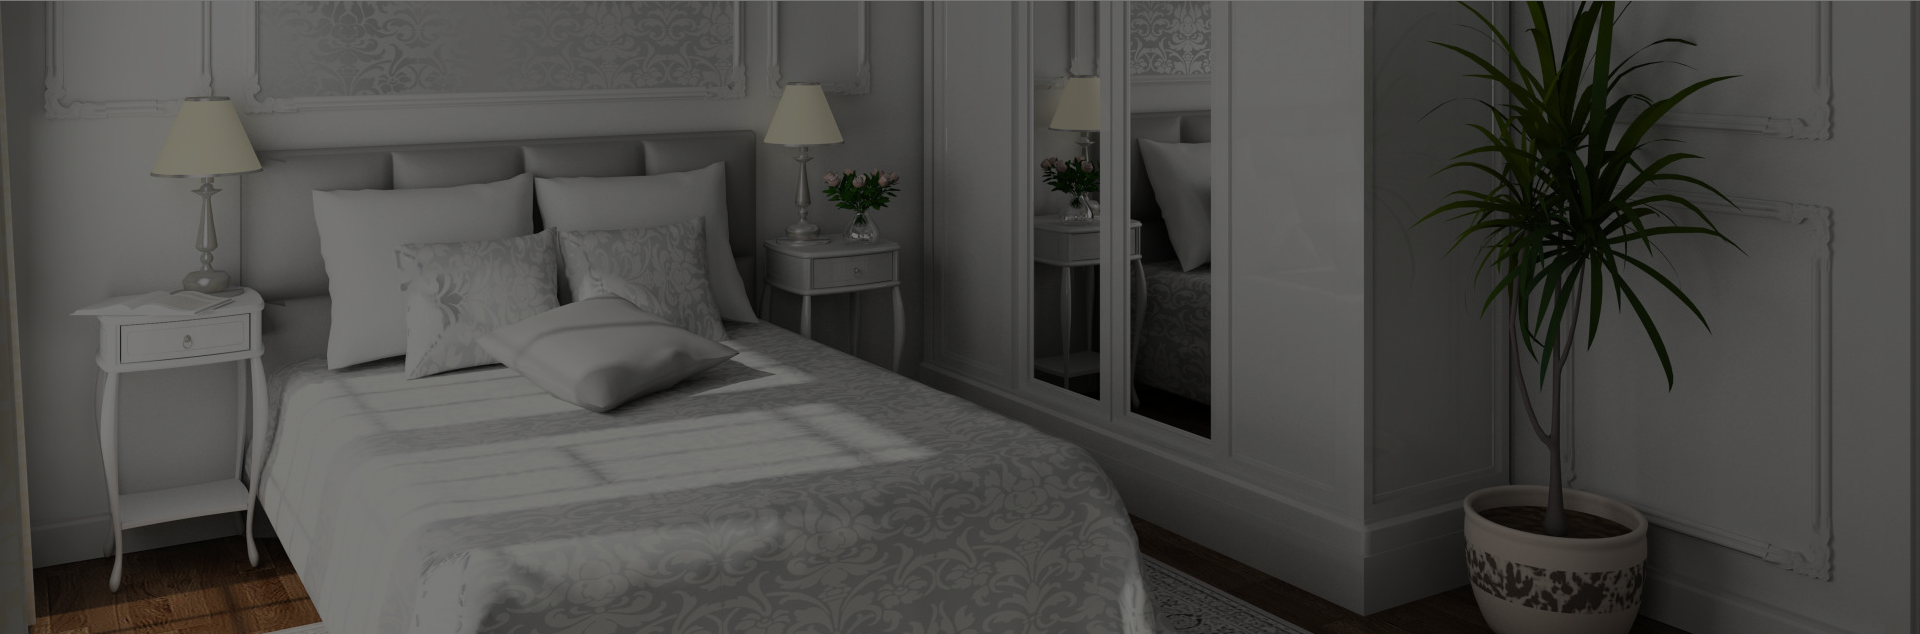 grey colored bedroom